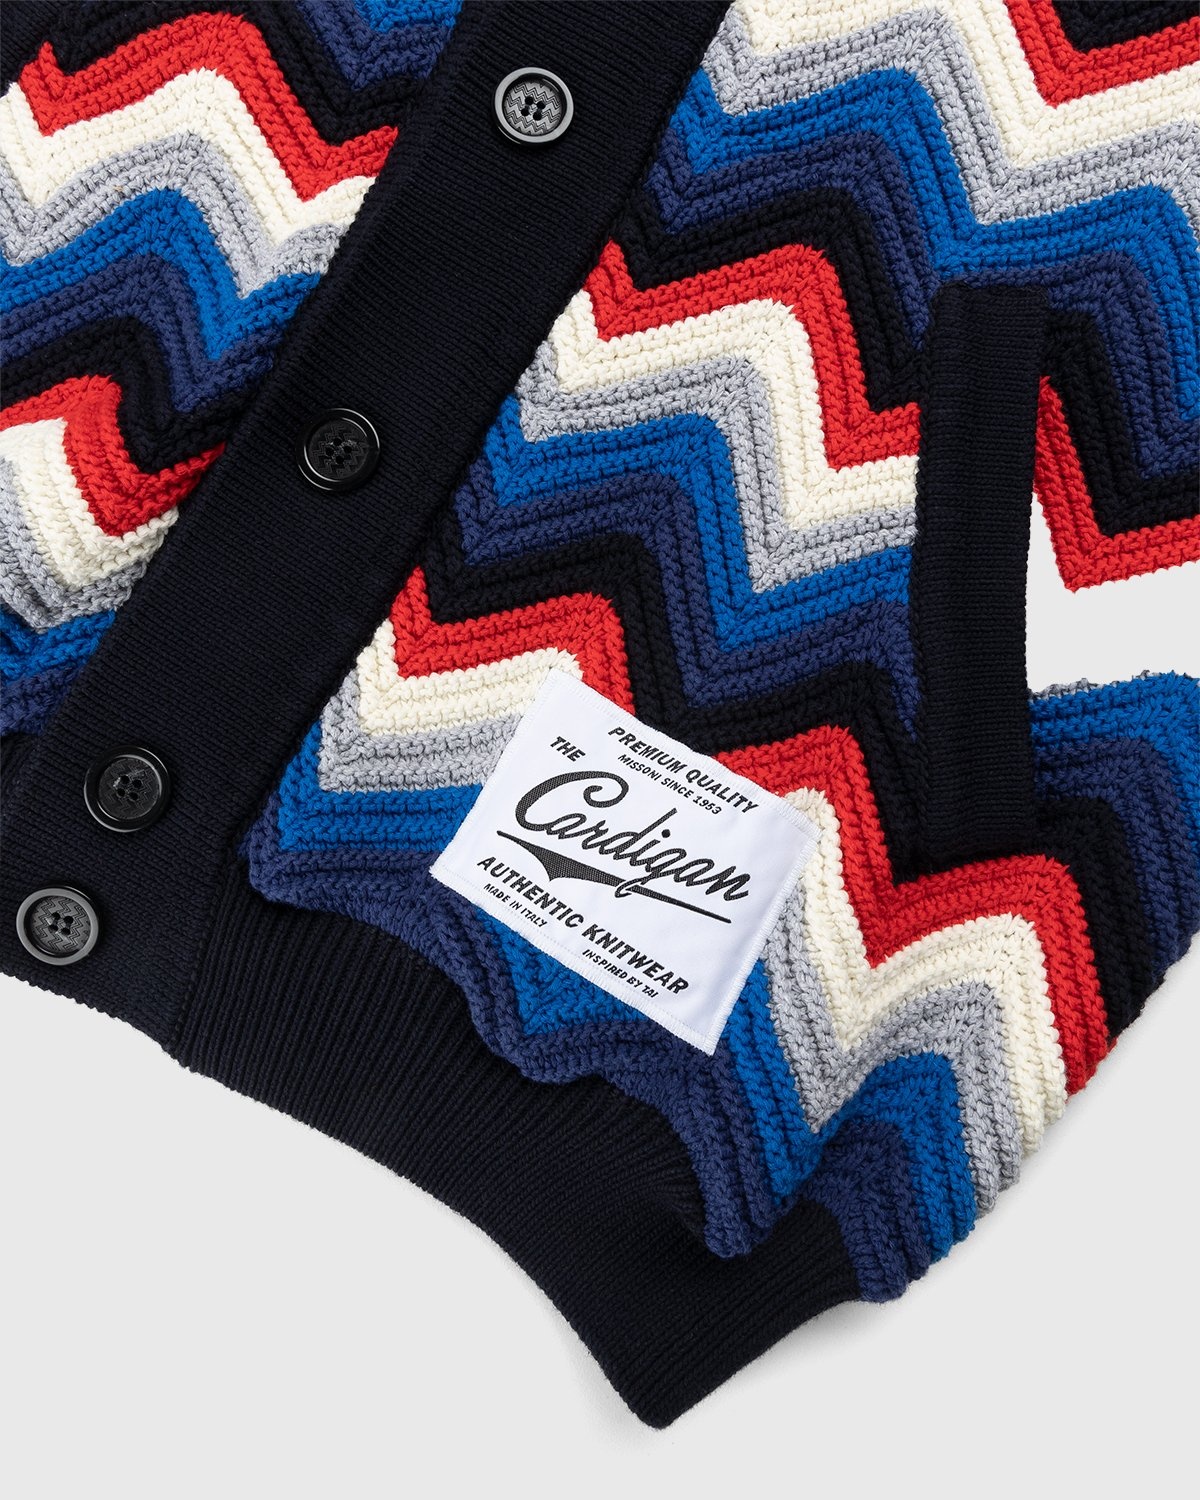 Missoni – Wavy Cotton Cardigan Multi - Knitwear - Multi - Image 4